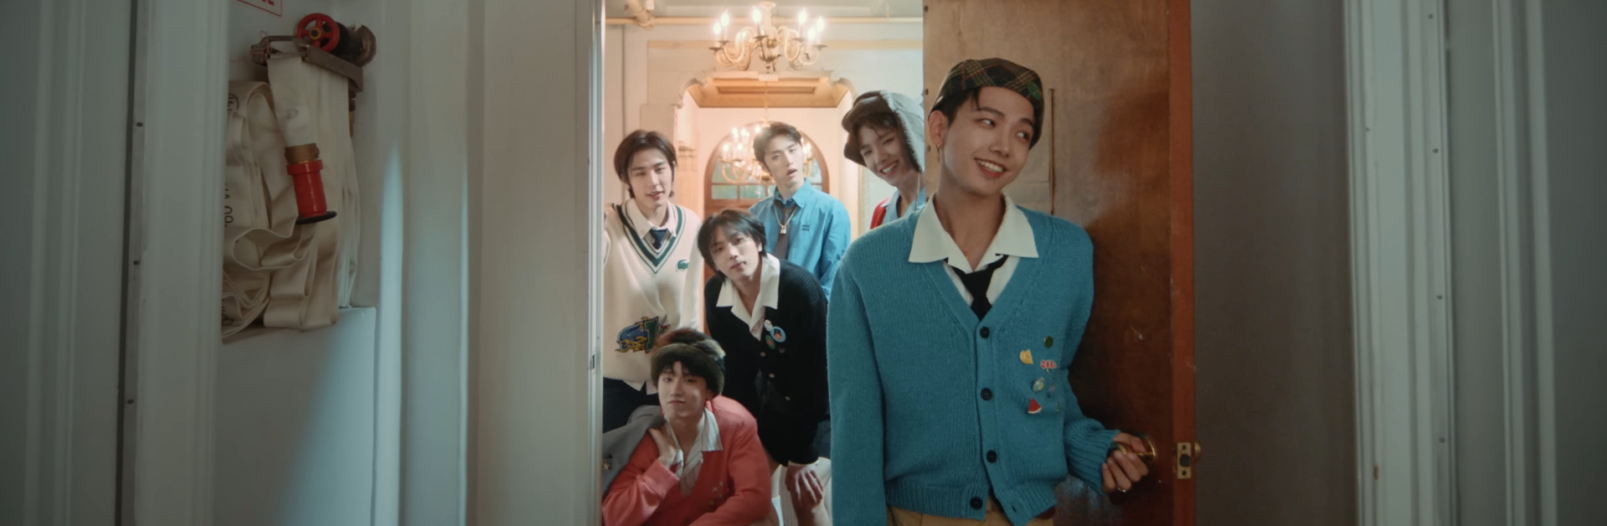 Image shows the 6 members of BOYNEXTDOOR in a doorway smiling at the camera